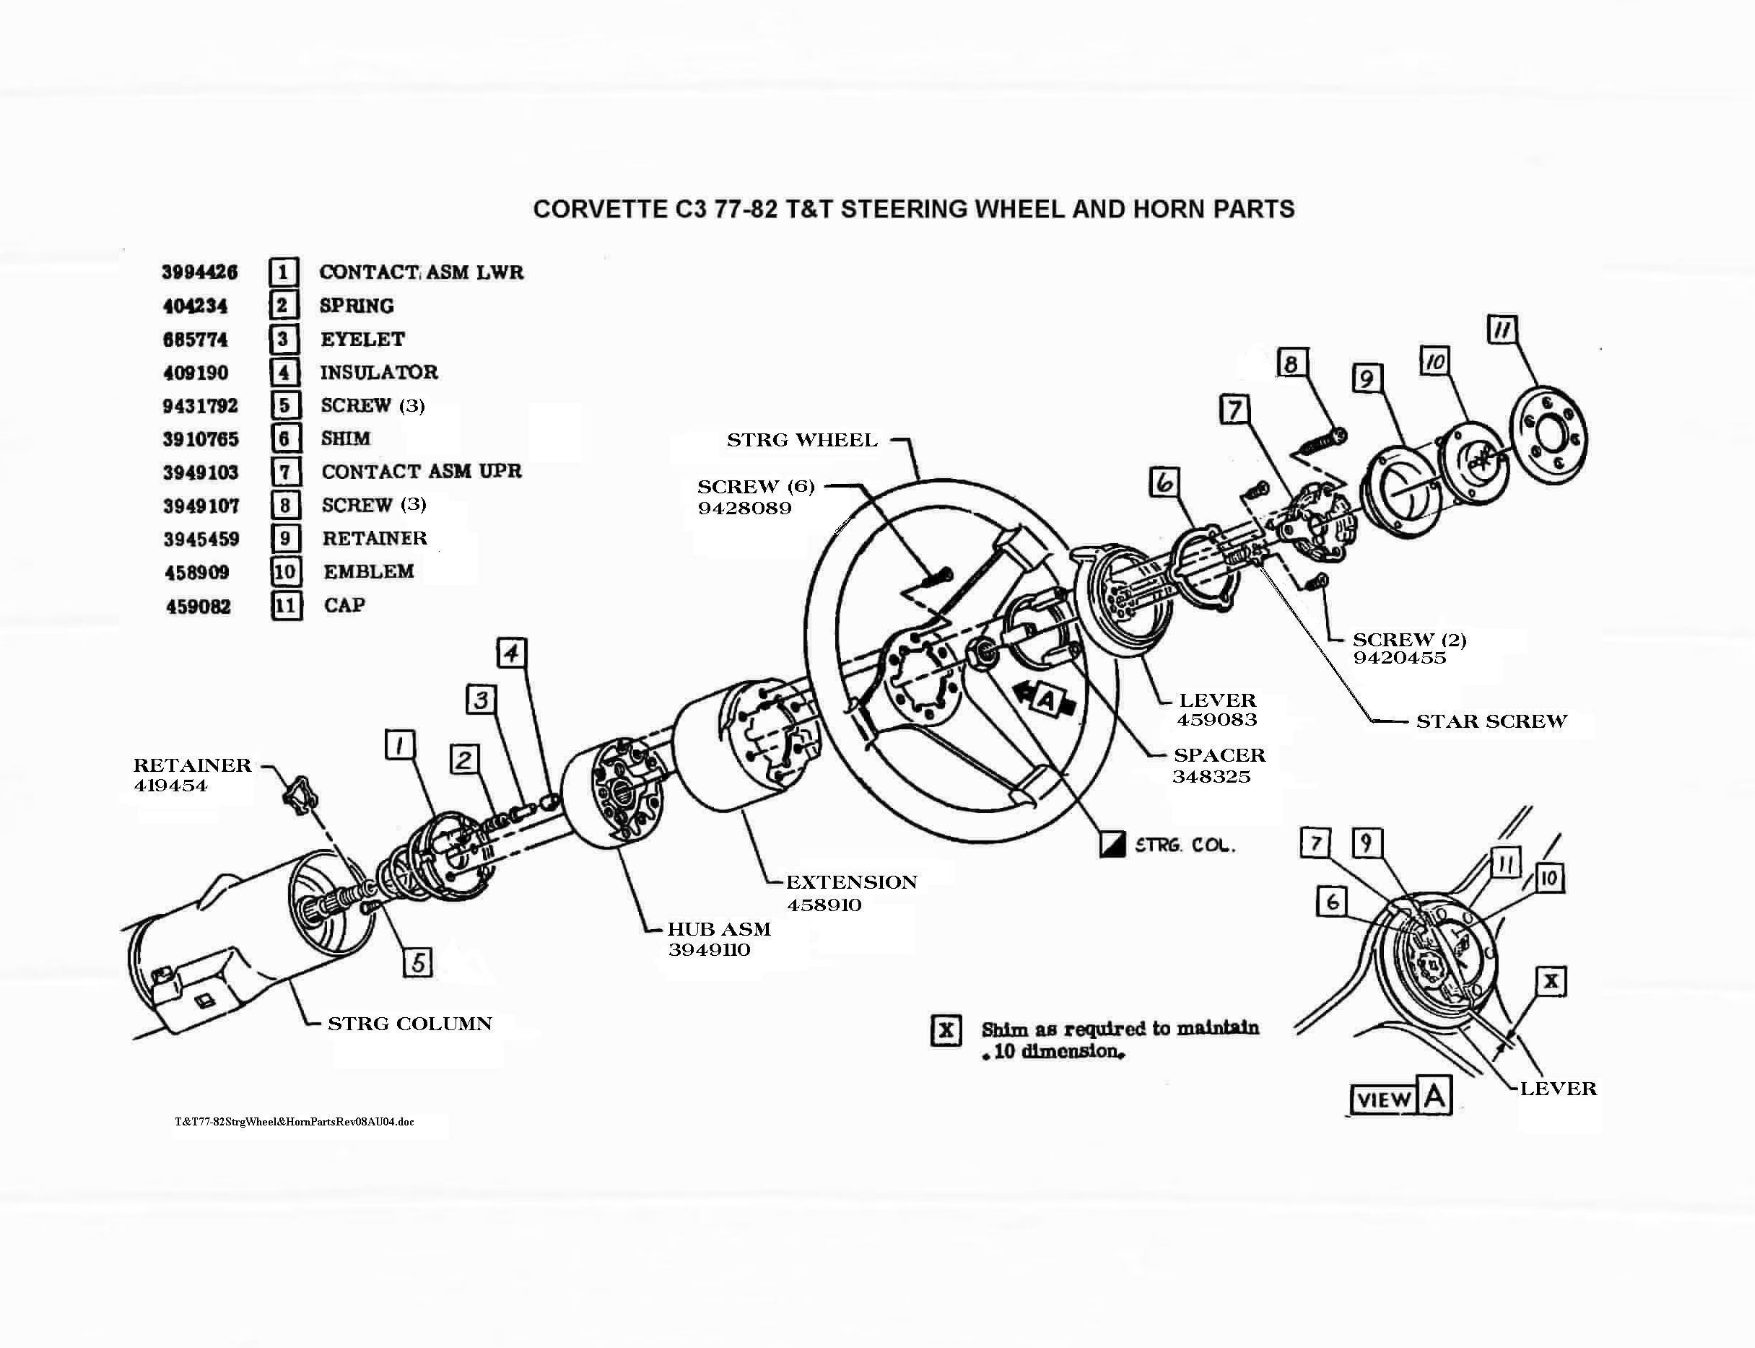 Gmc exploded parts diagrams #4